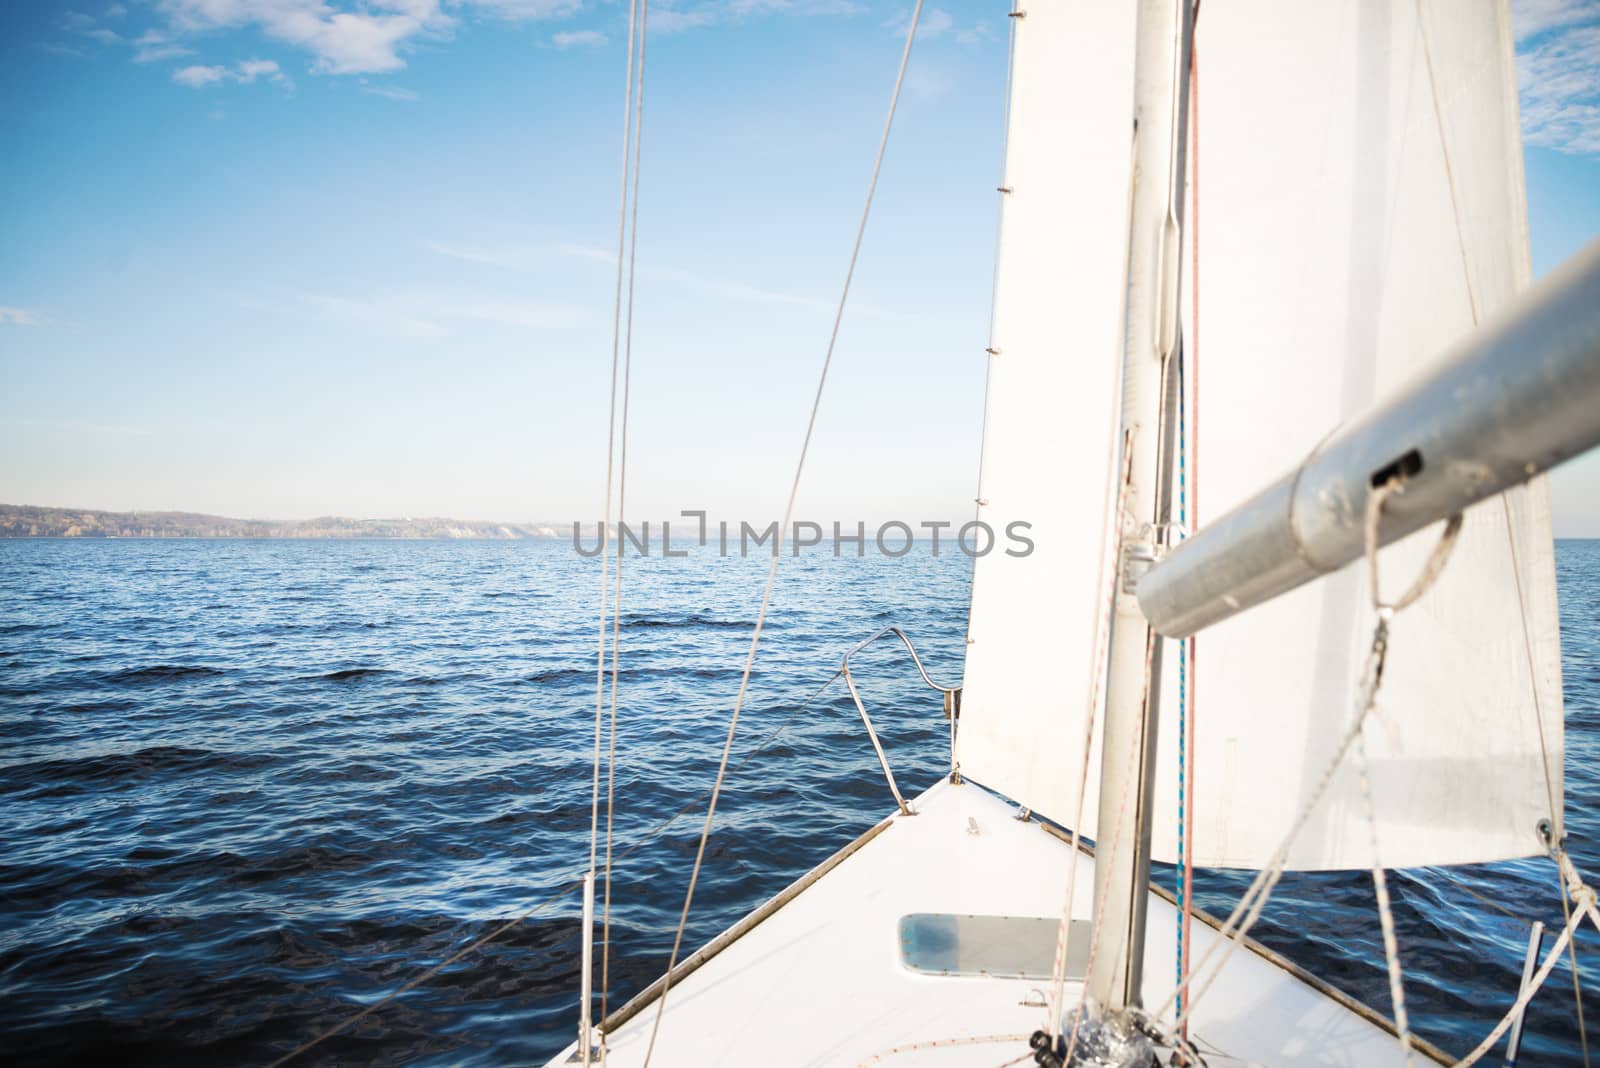 The white yacht sailing towards the sunset